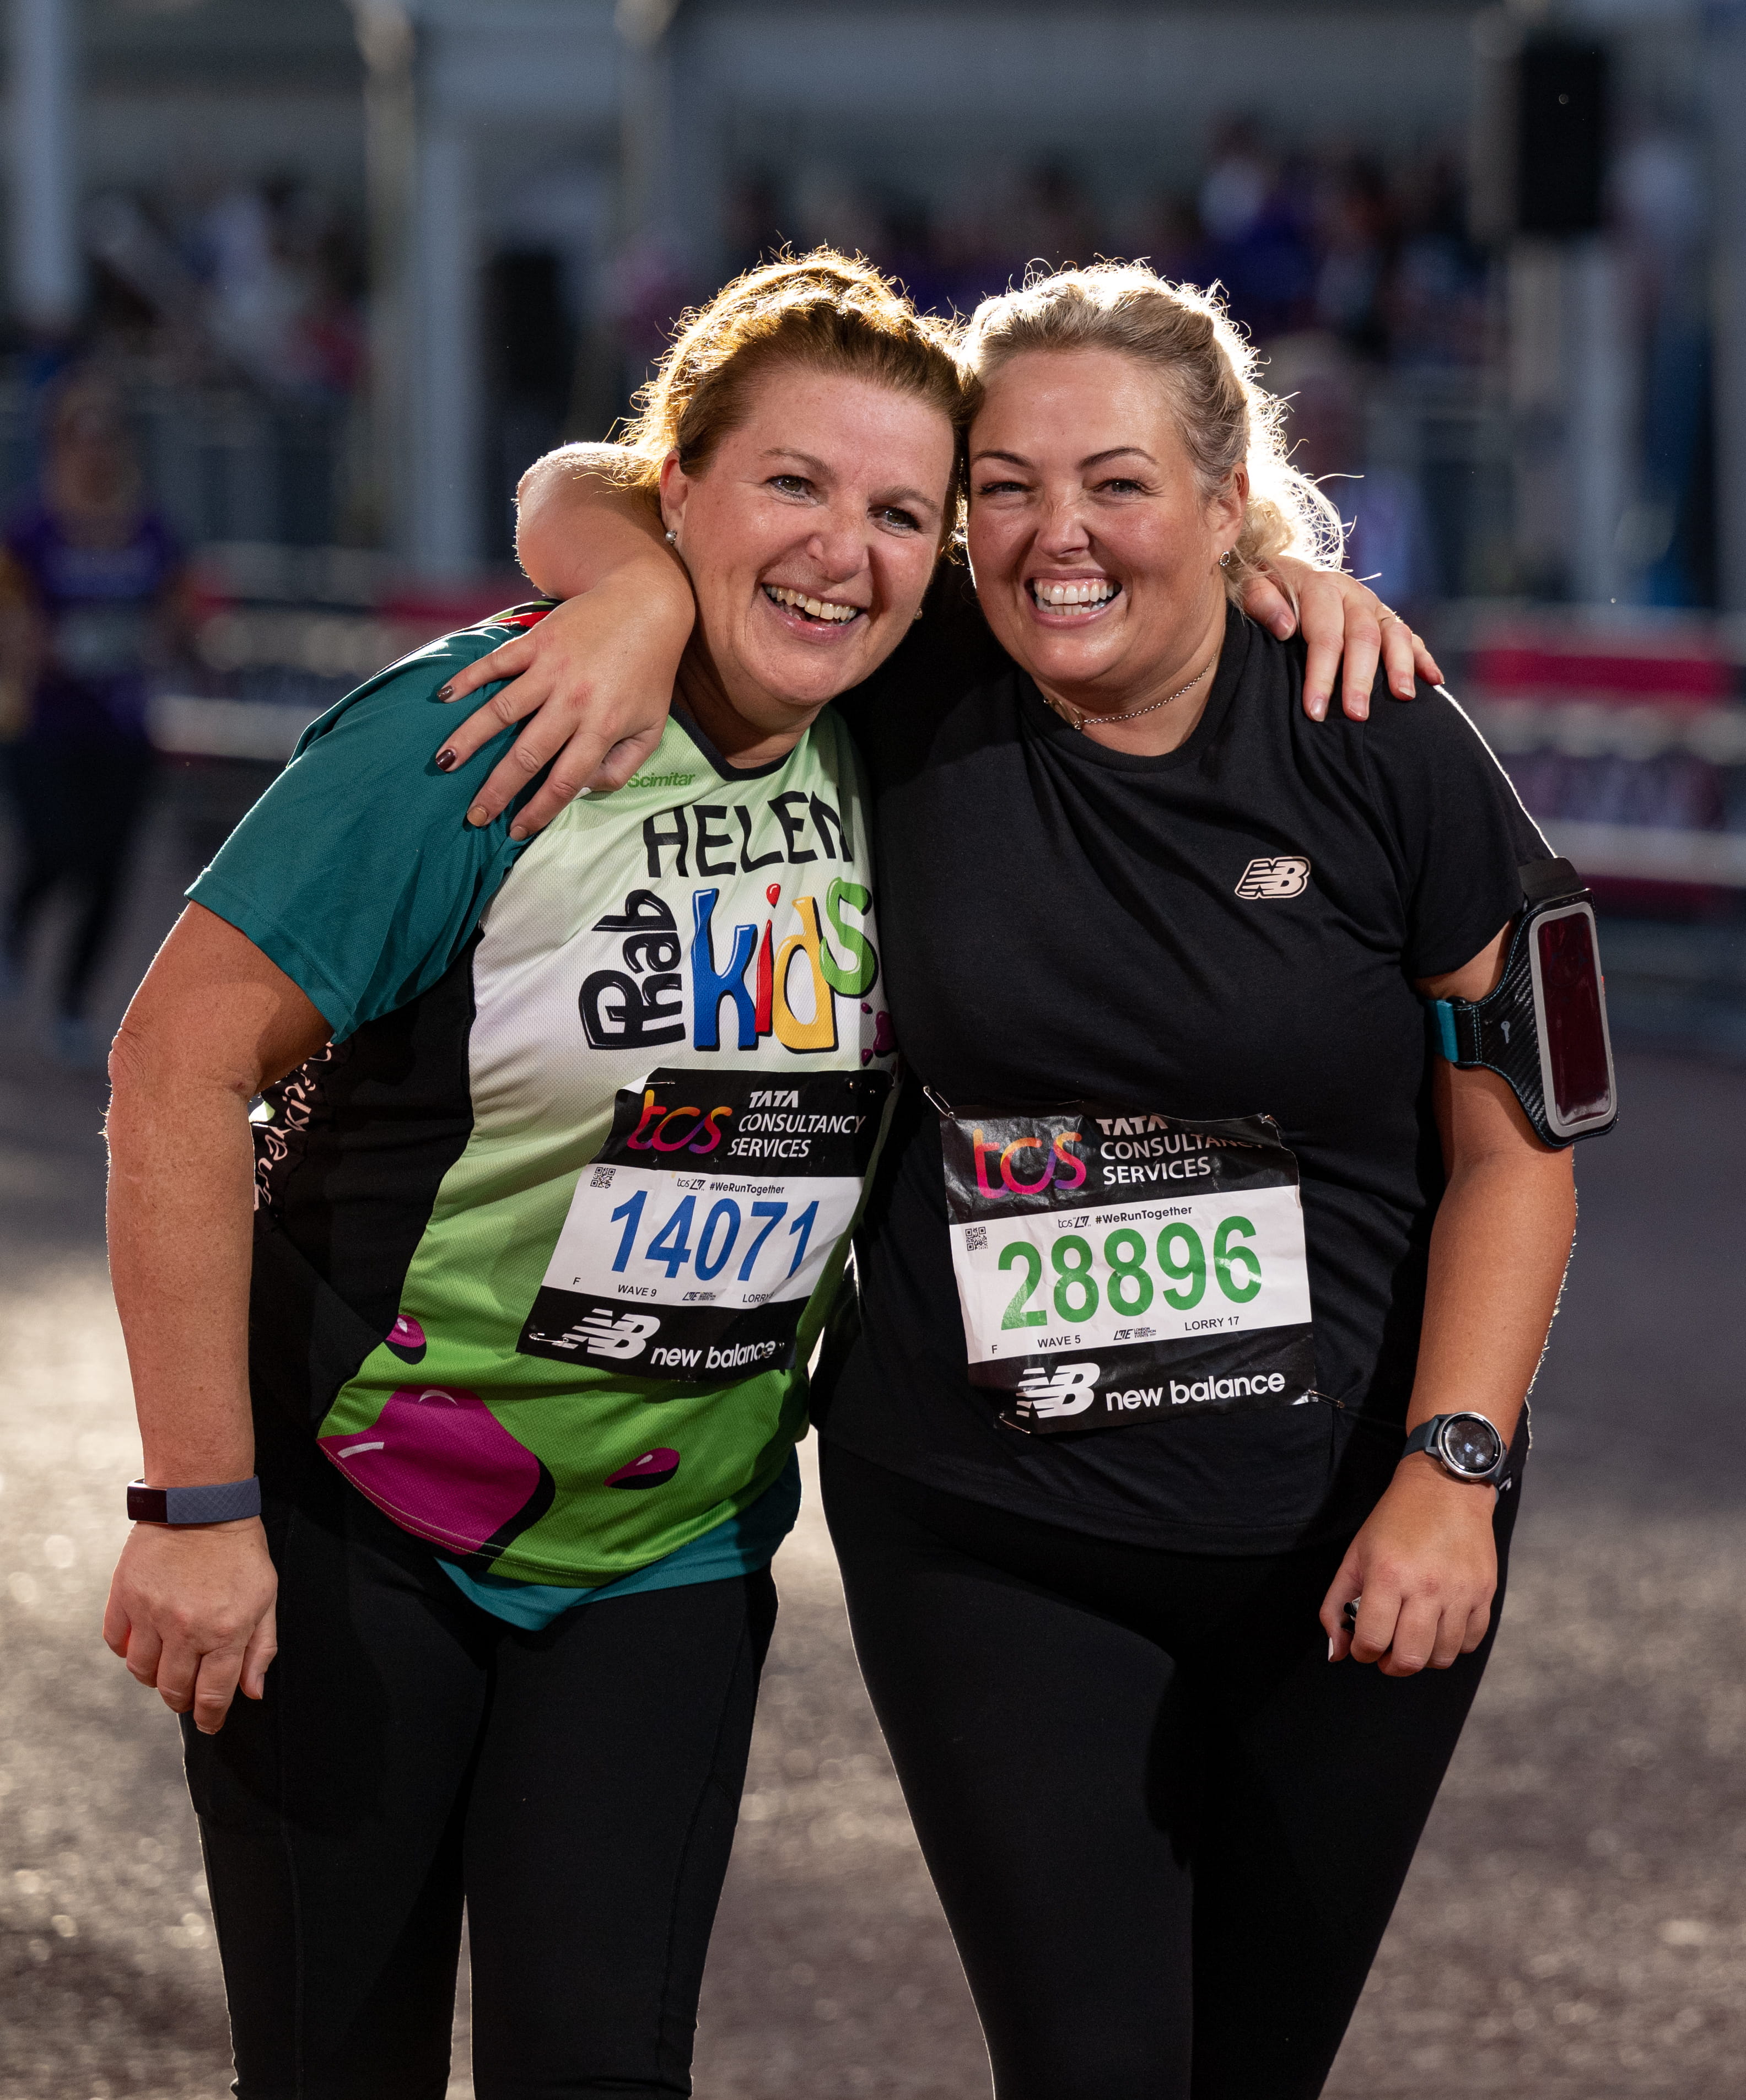 Two smiling participants at the TCS London Marathon